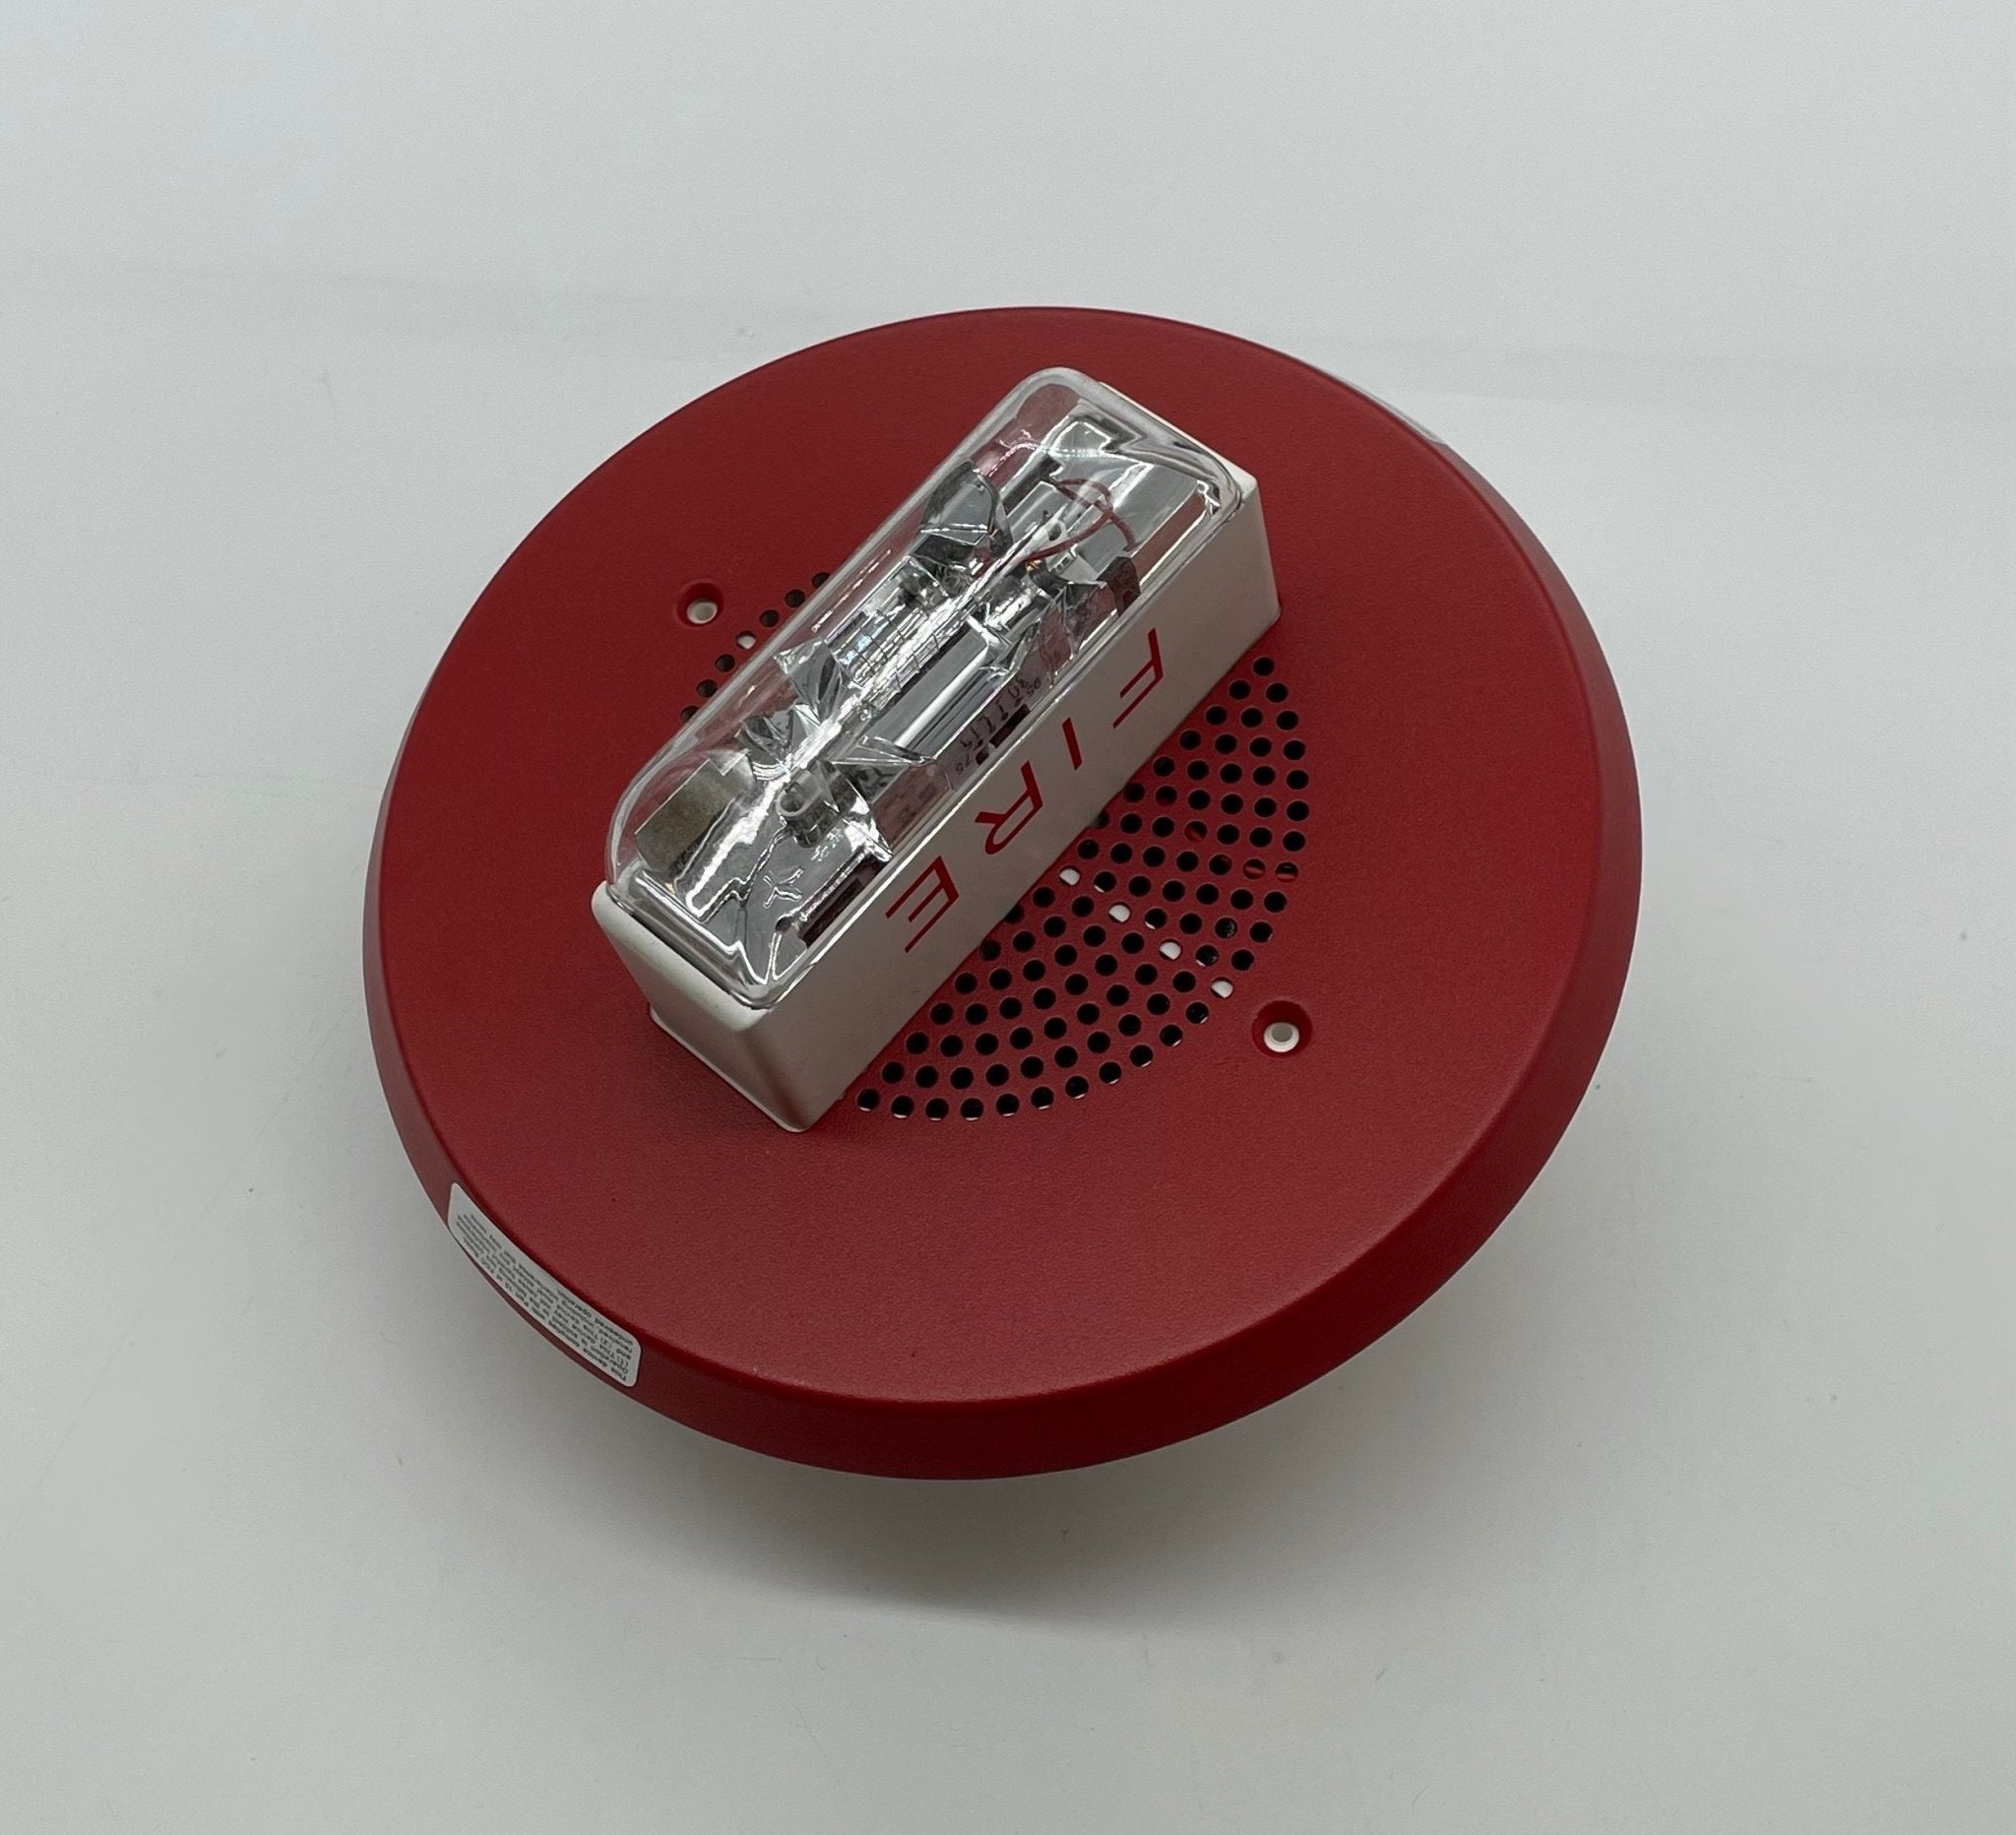 Wheelock ET90-24MCC-FR - The Fire Alarm Supplier